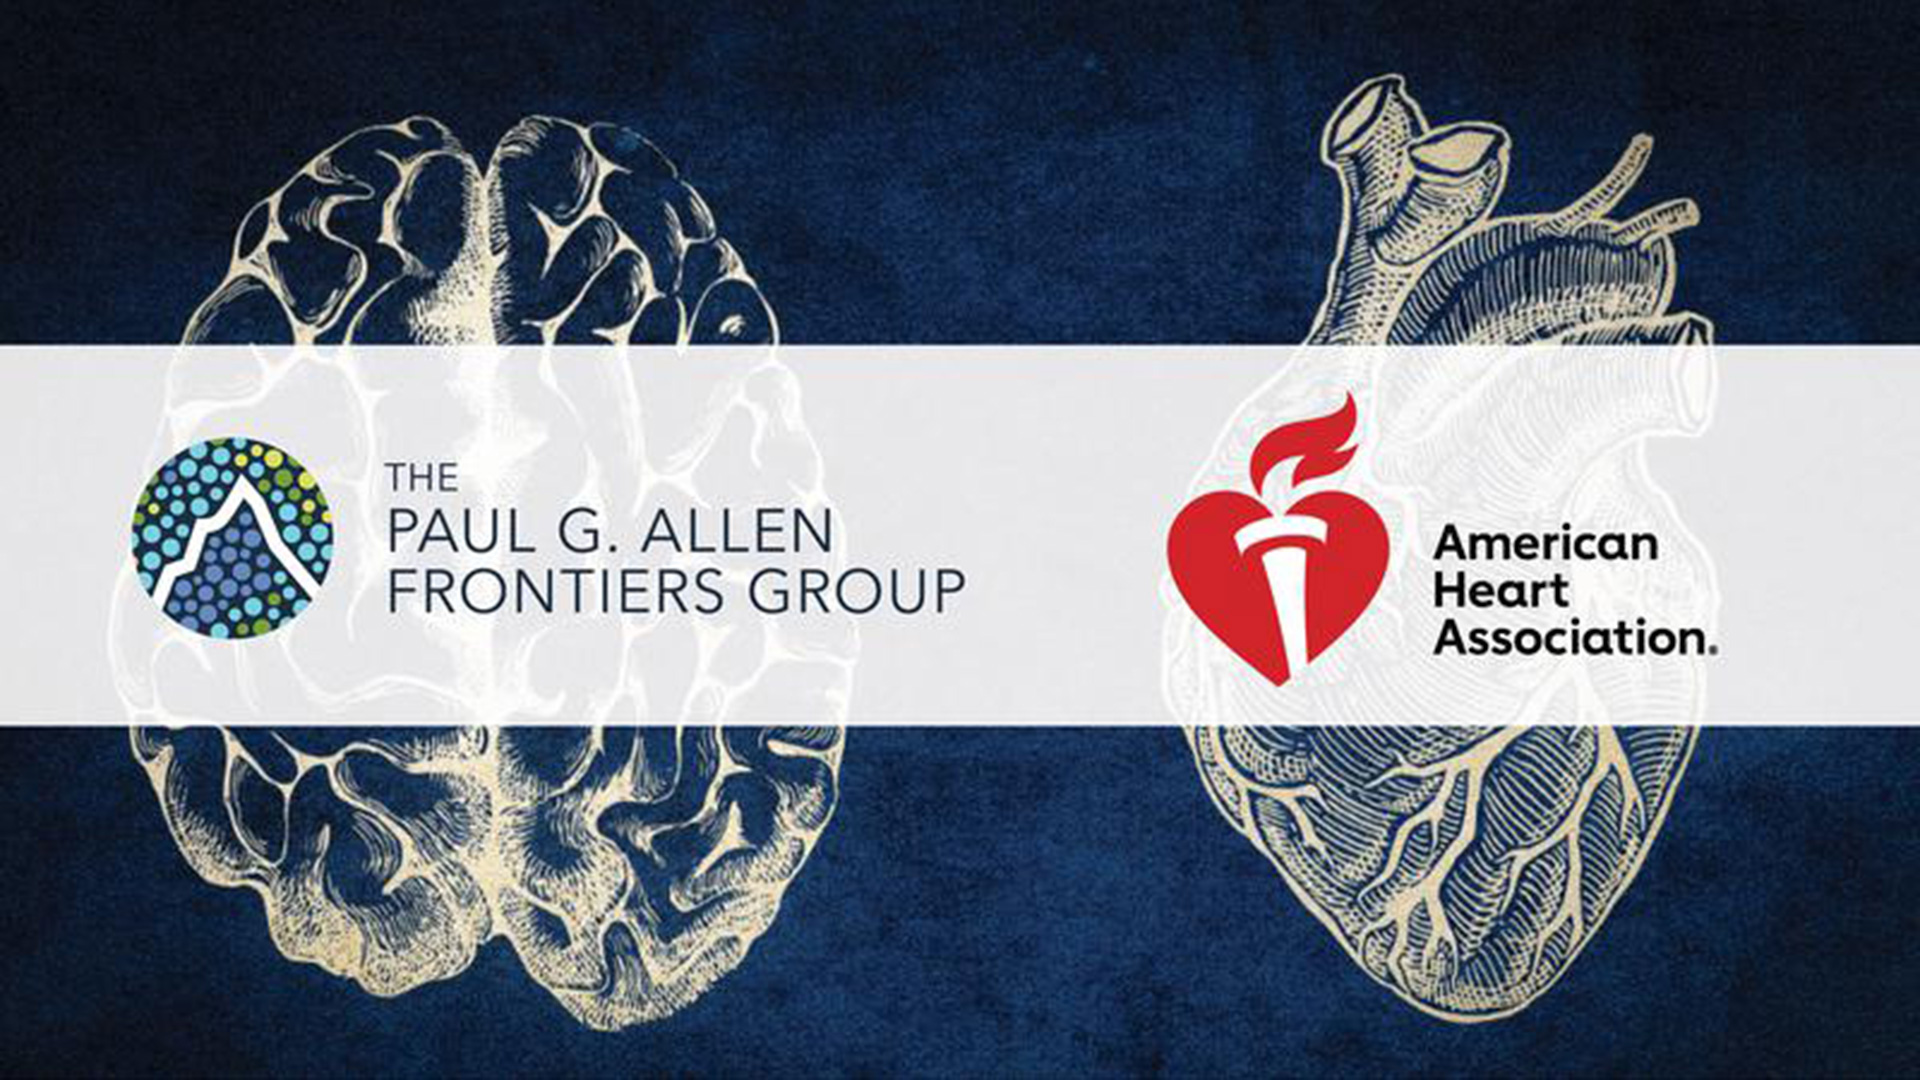 AHA-Allen Initiative partnership